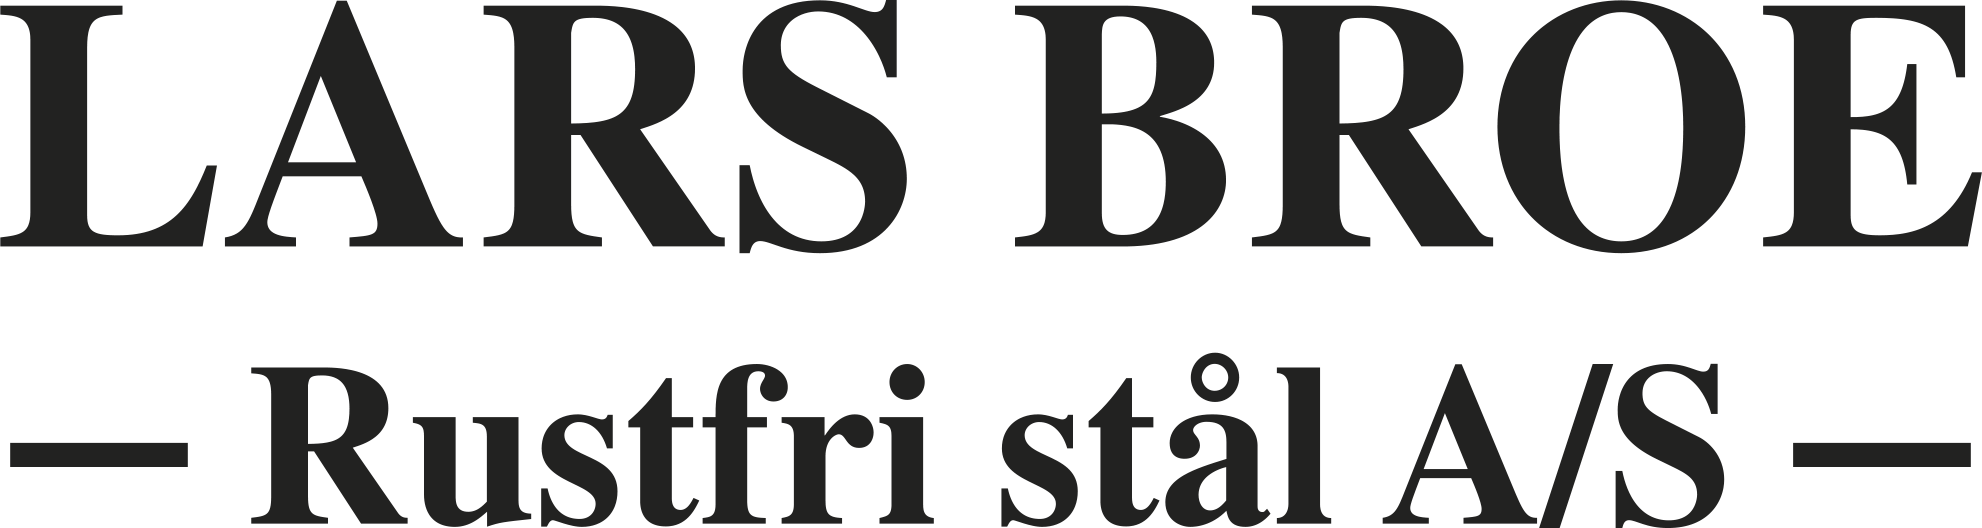 logo - Lars Broe Rustfri stål A/S